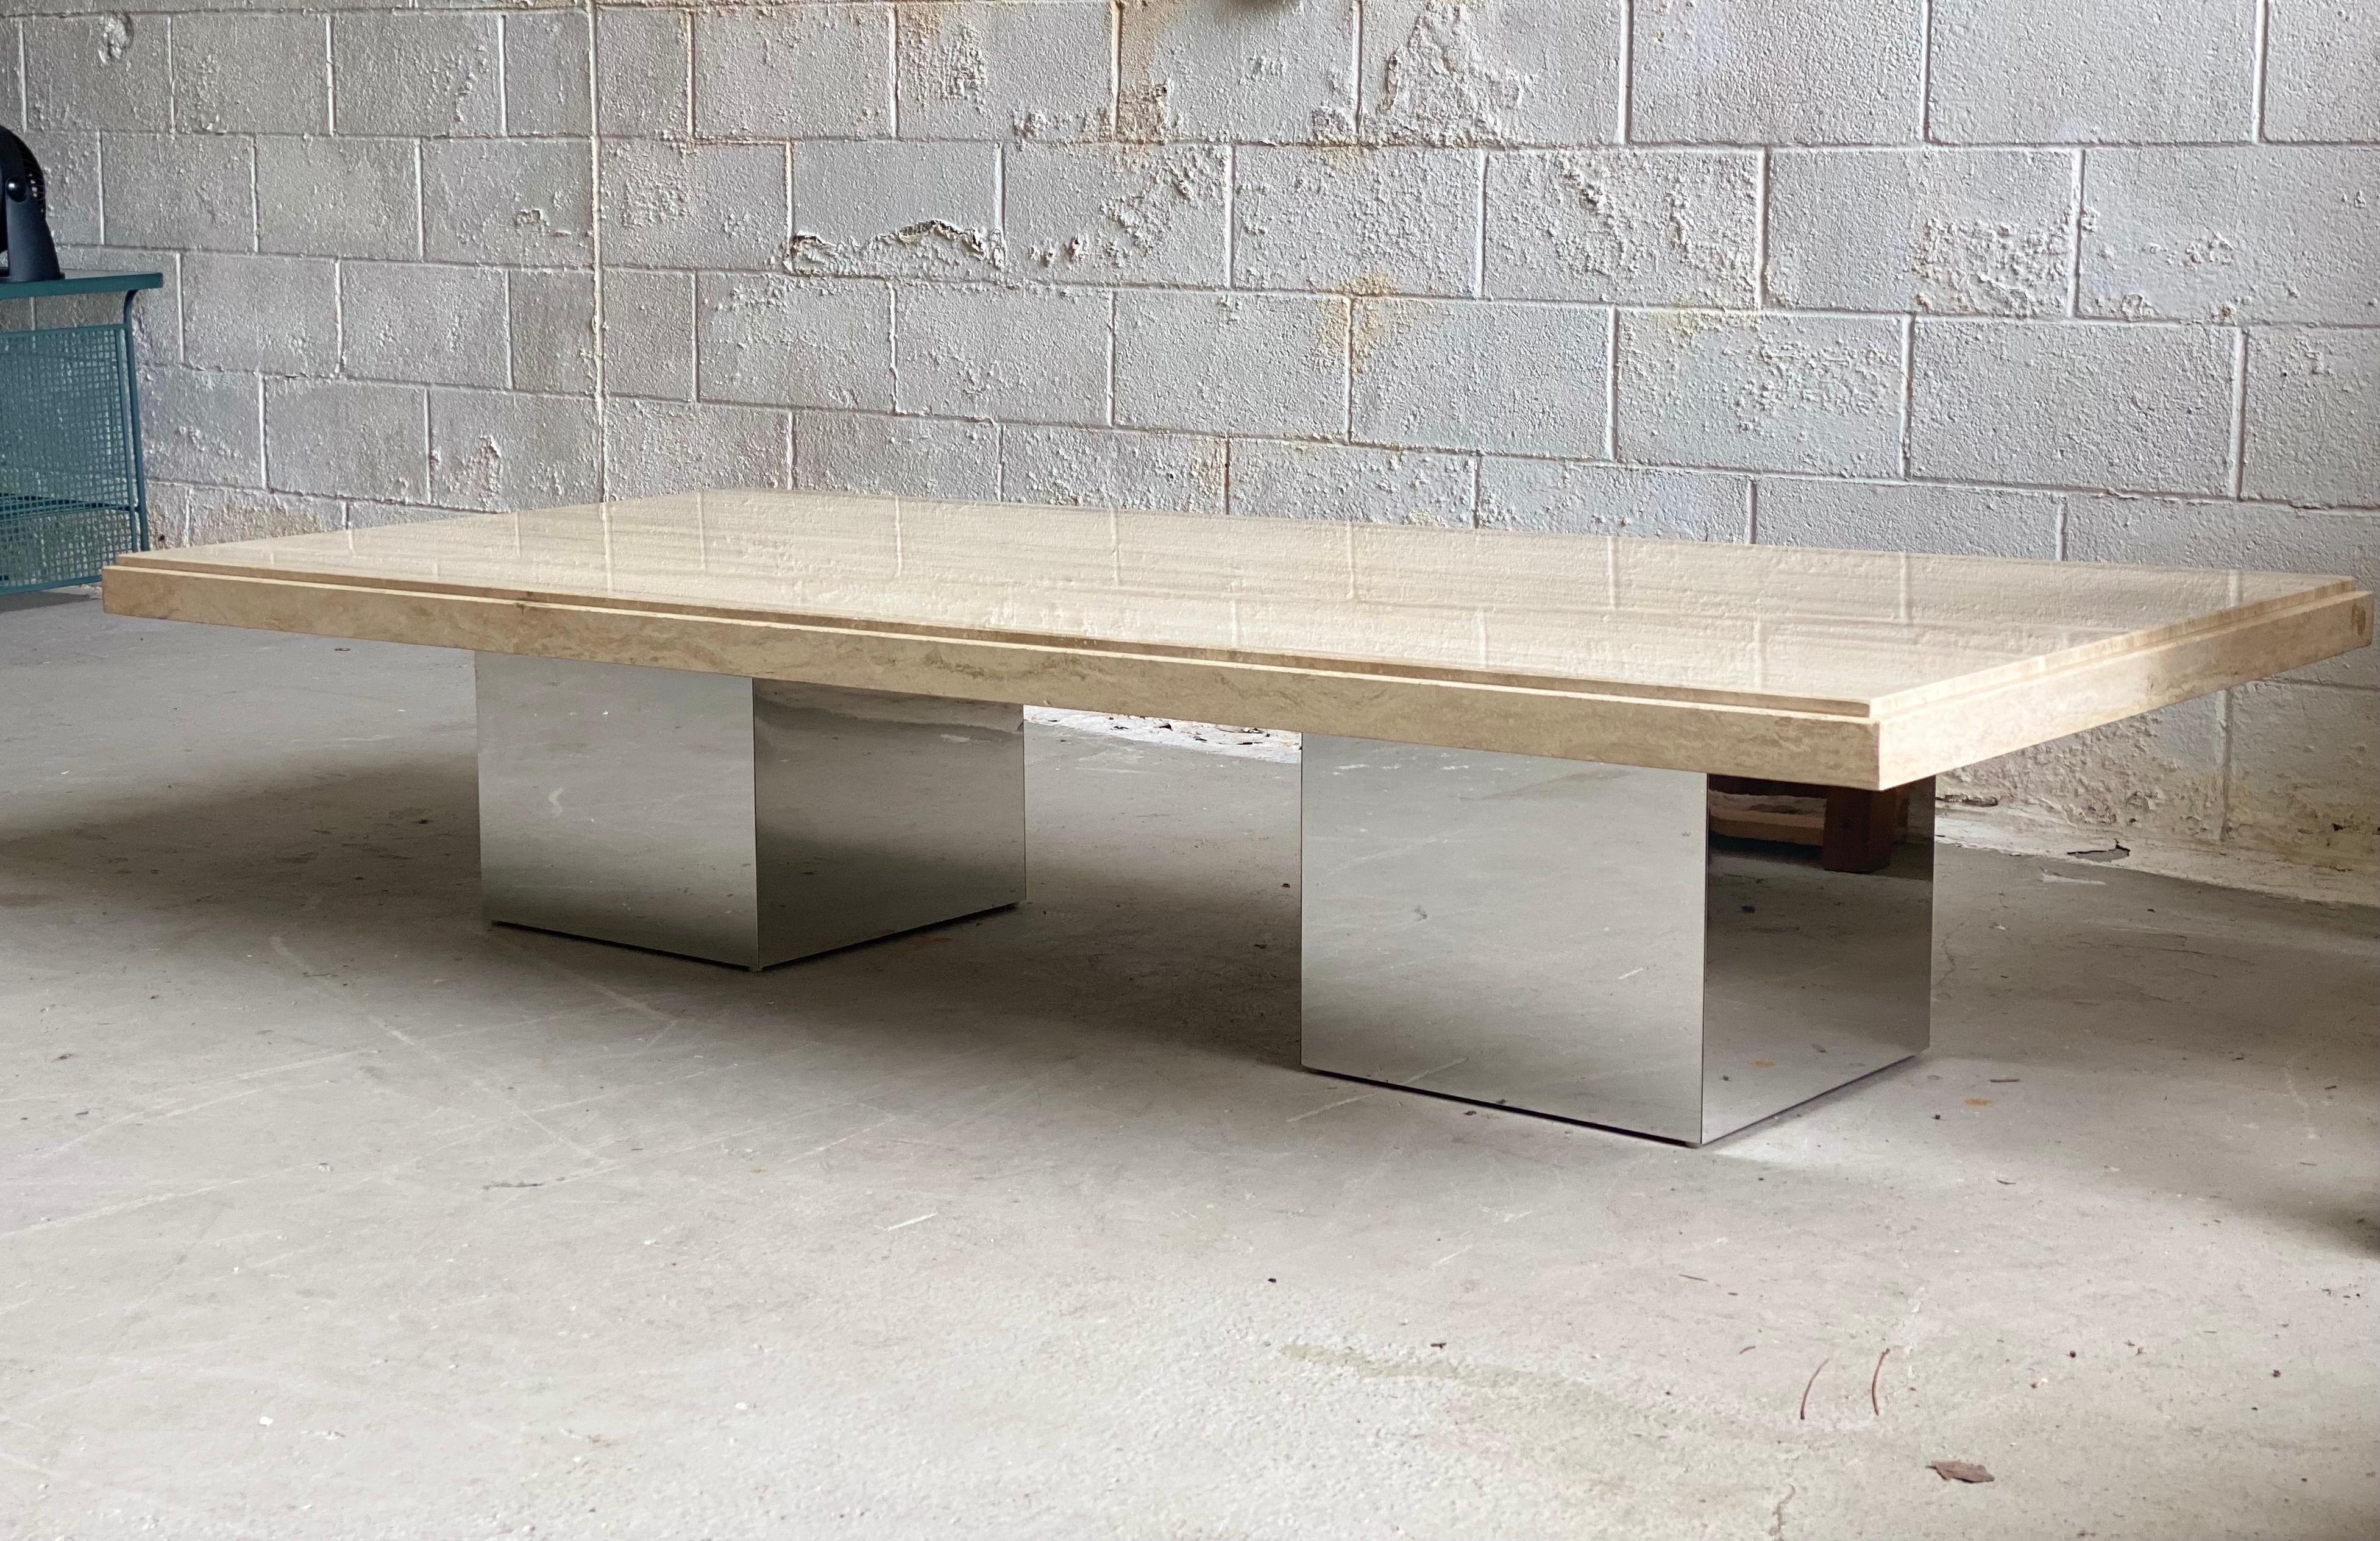 rectangular travertine coffee table